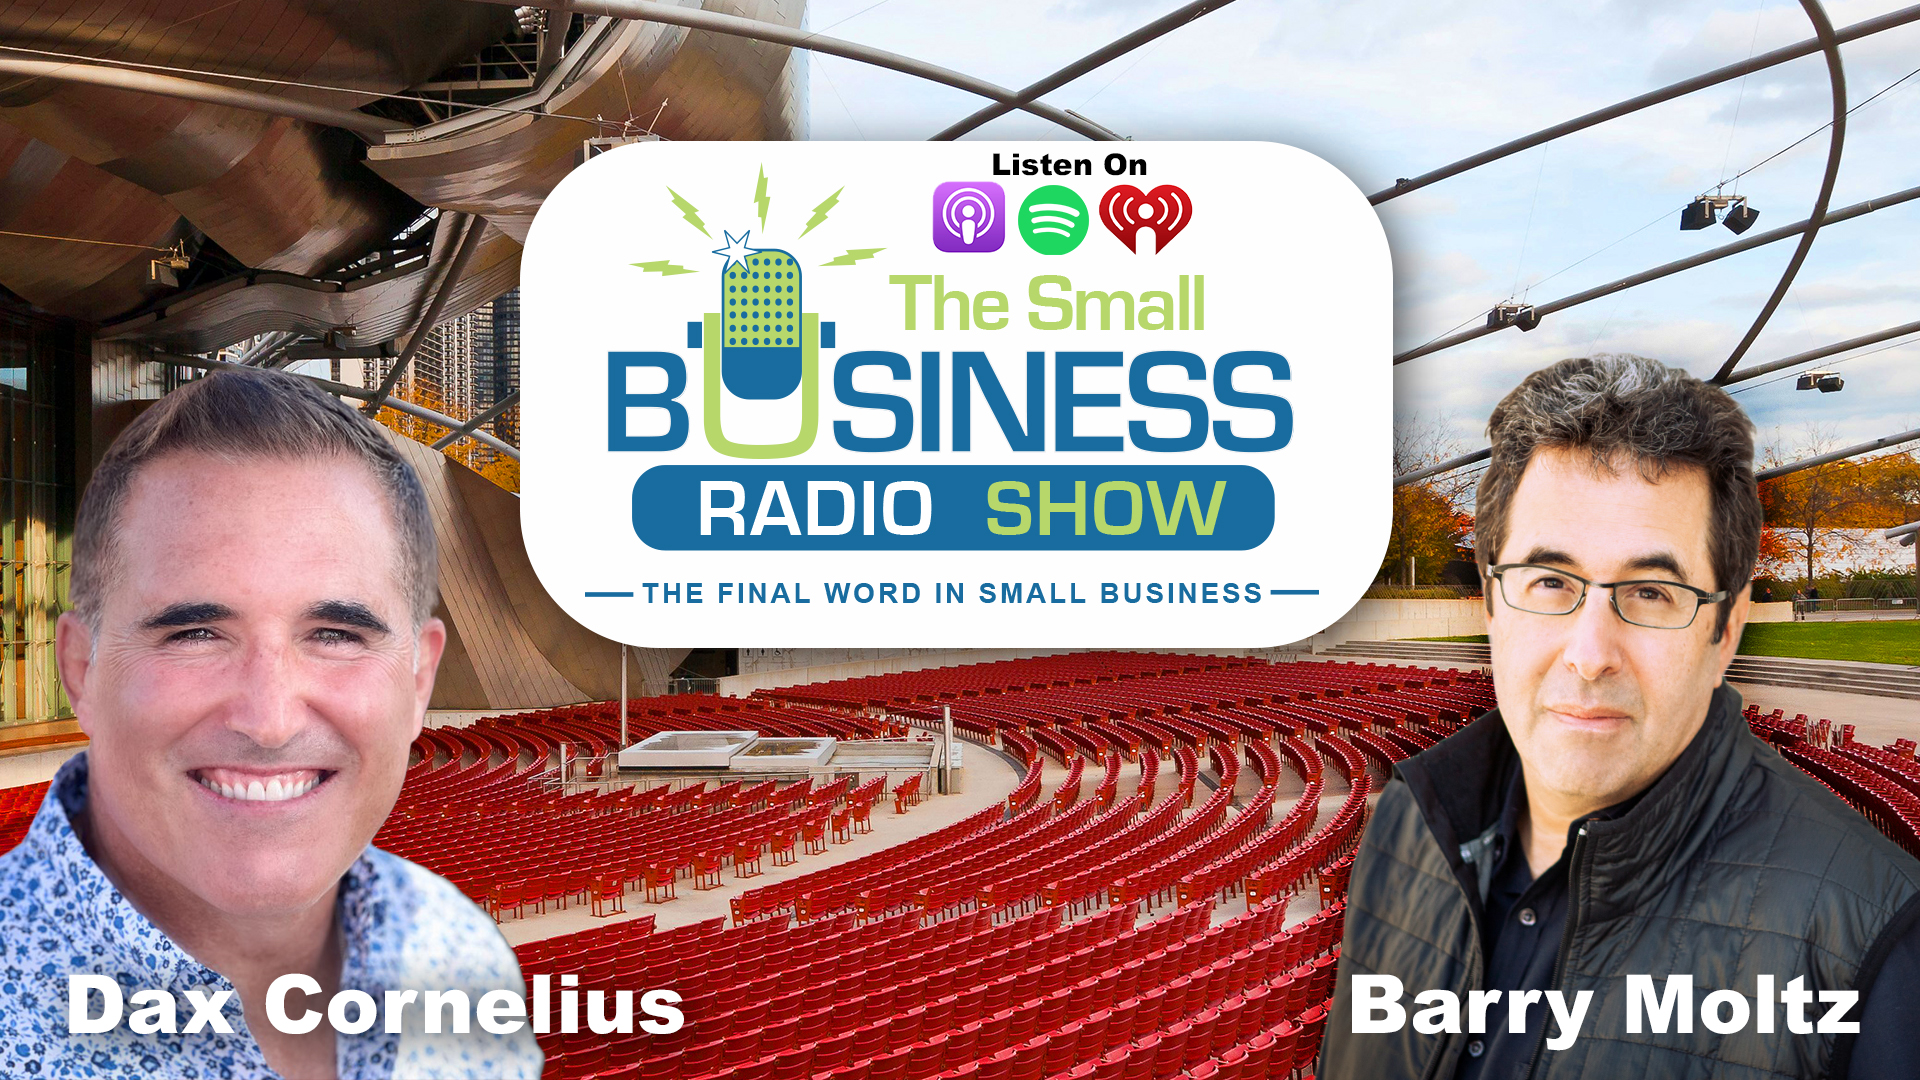 Dax Cornelius on The Small Business Radio Show